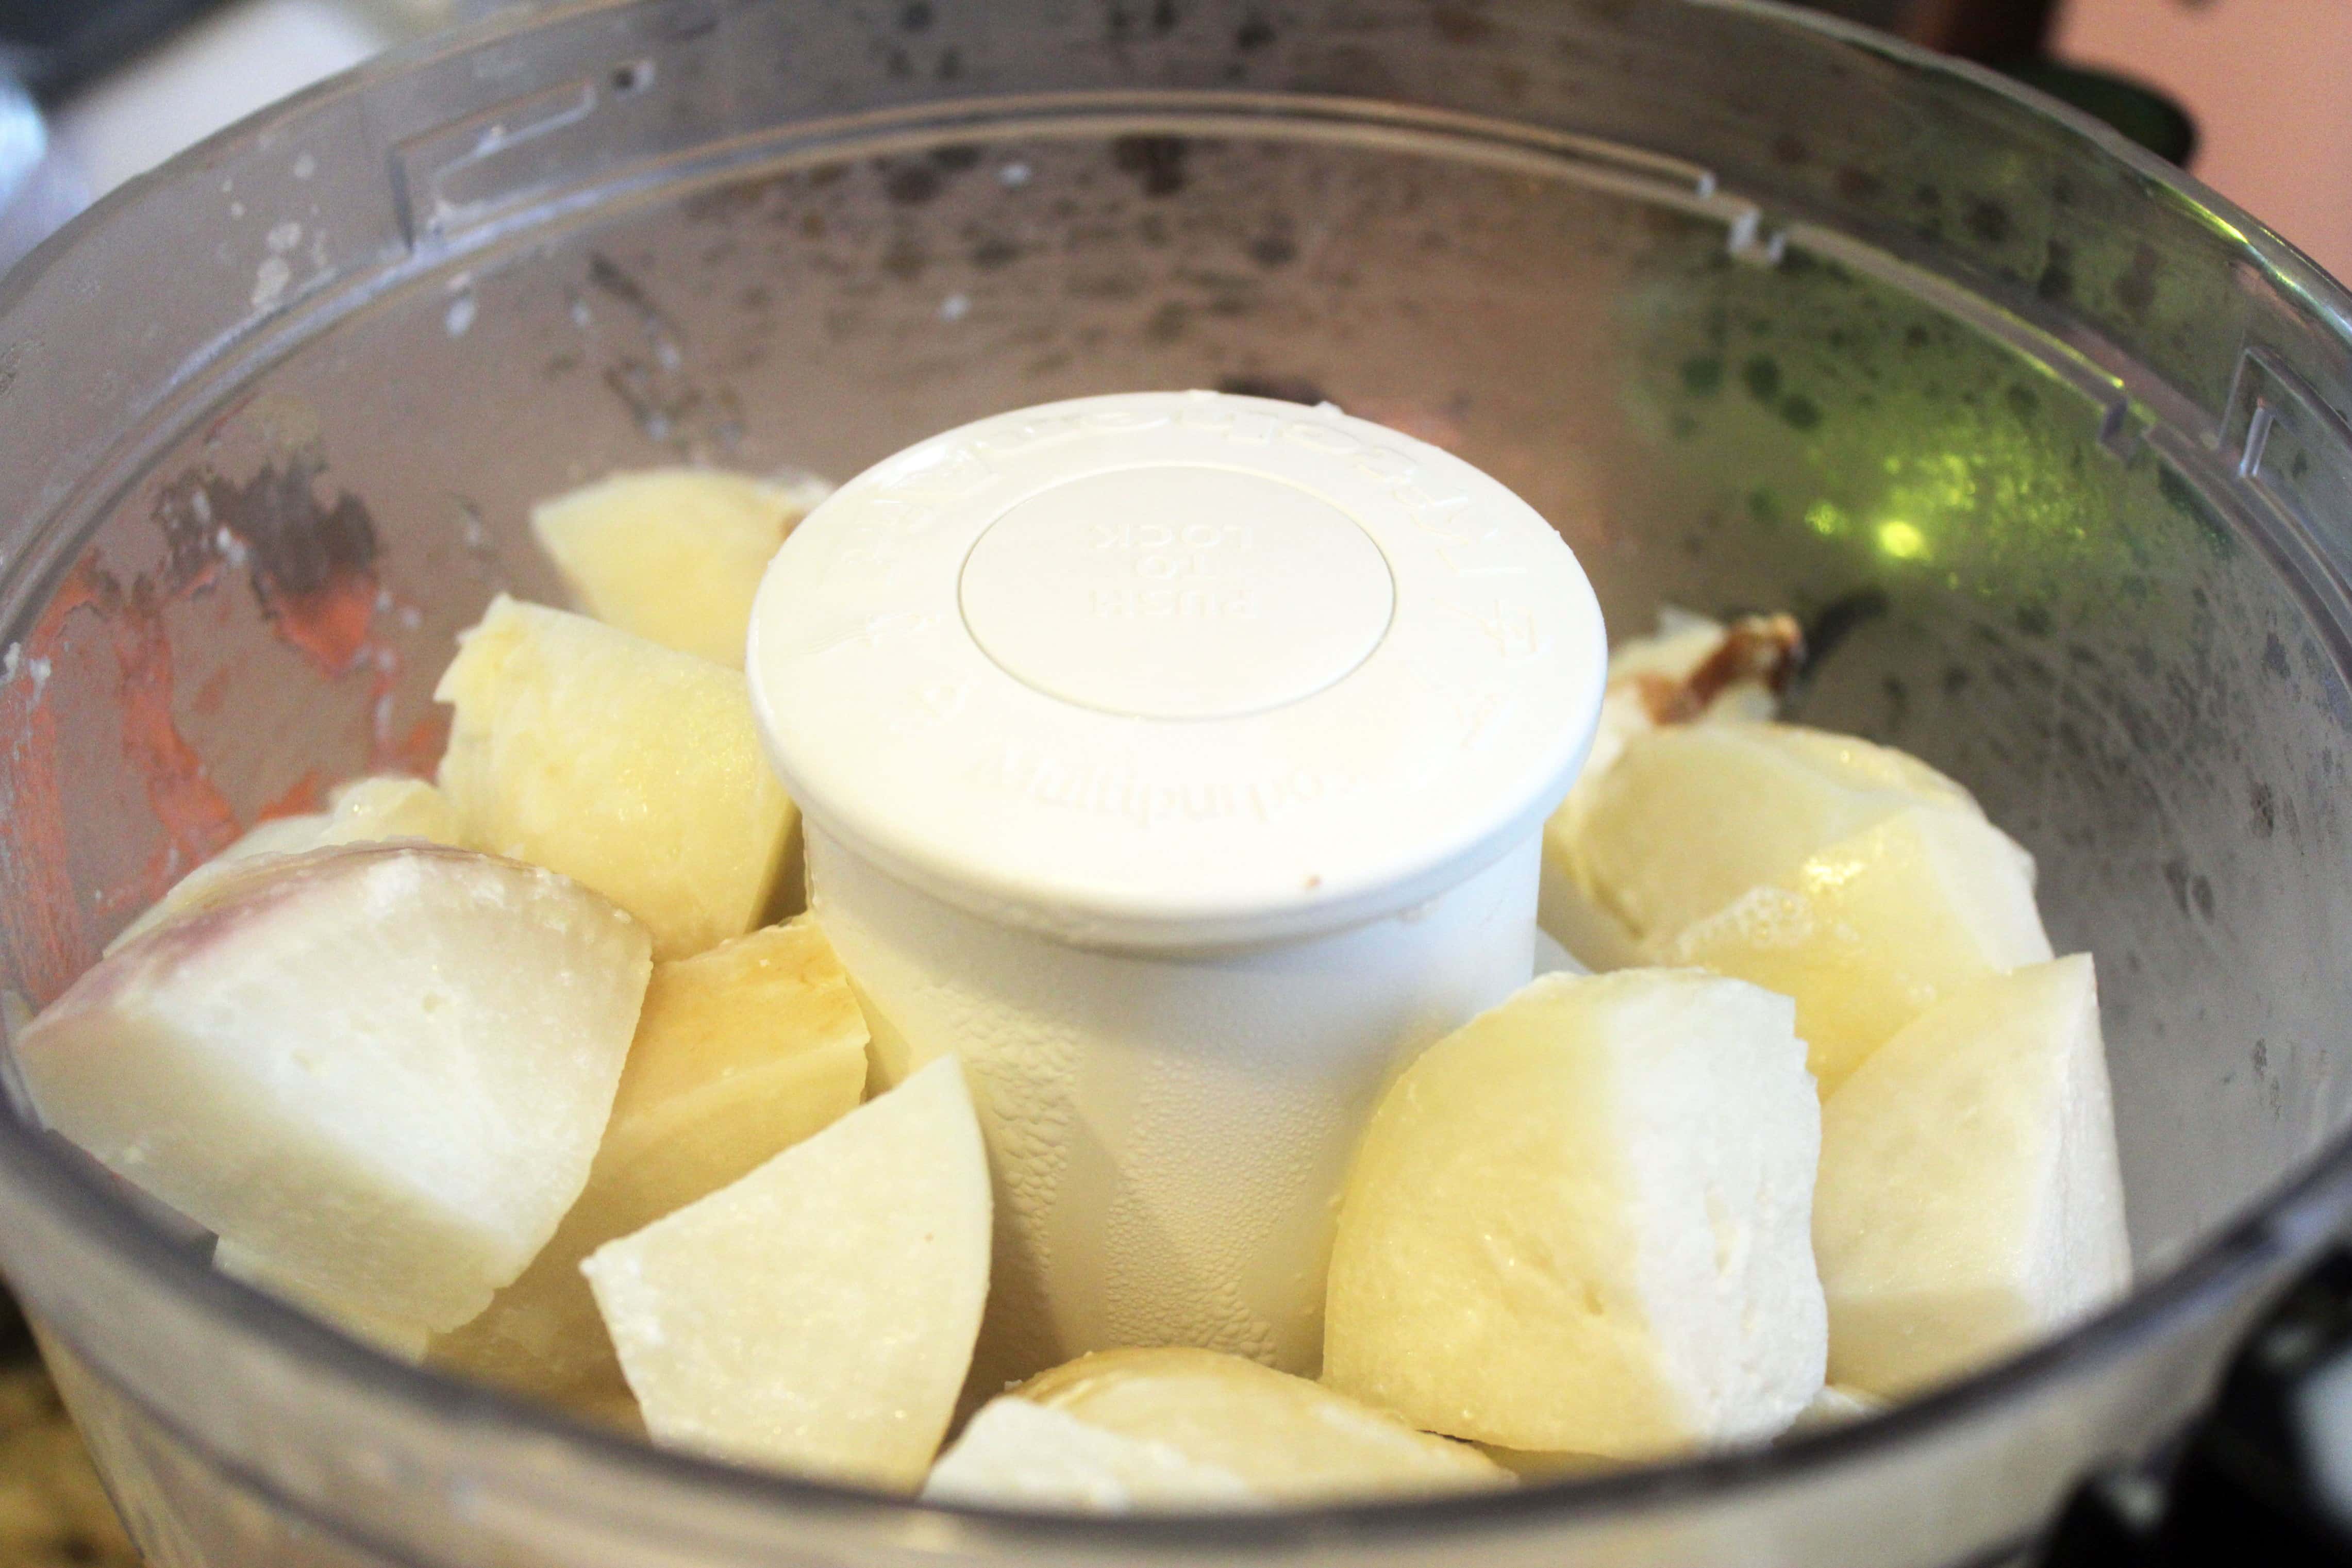 Add turnips to food processor